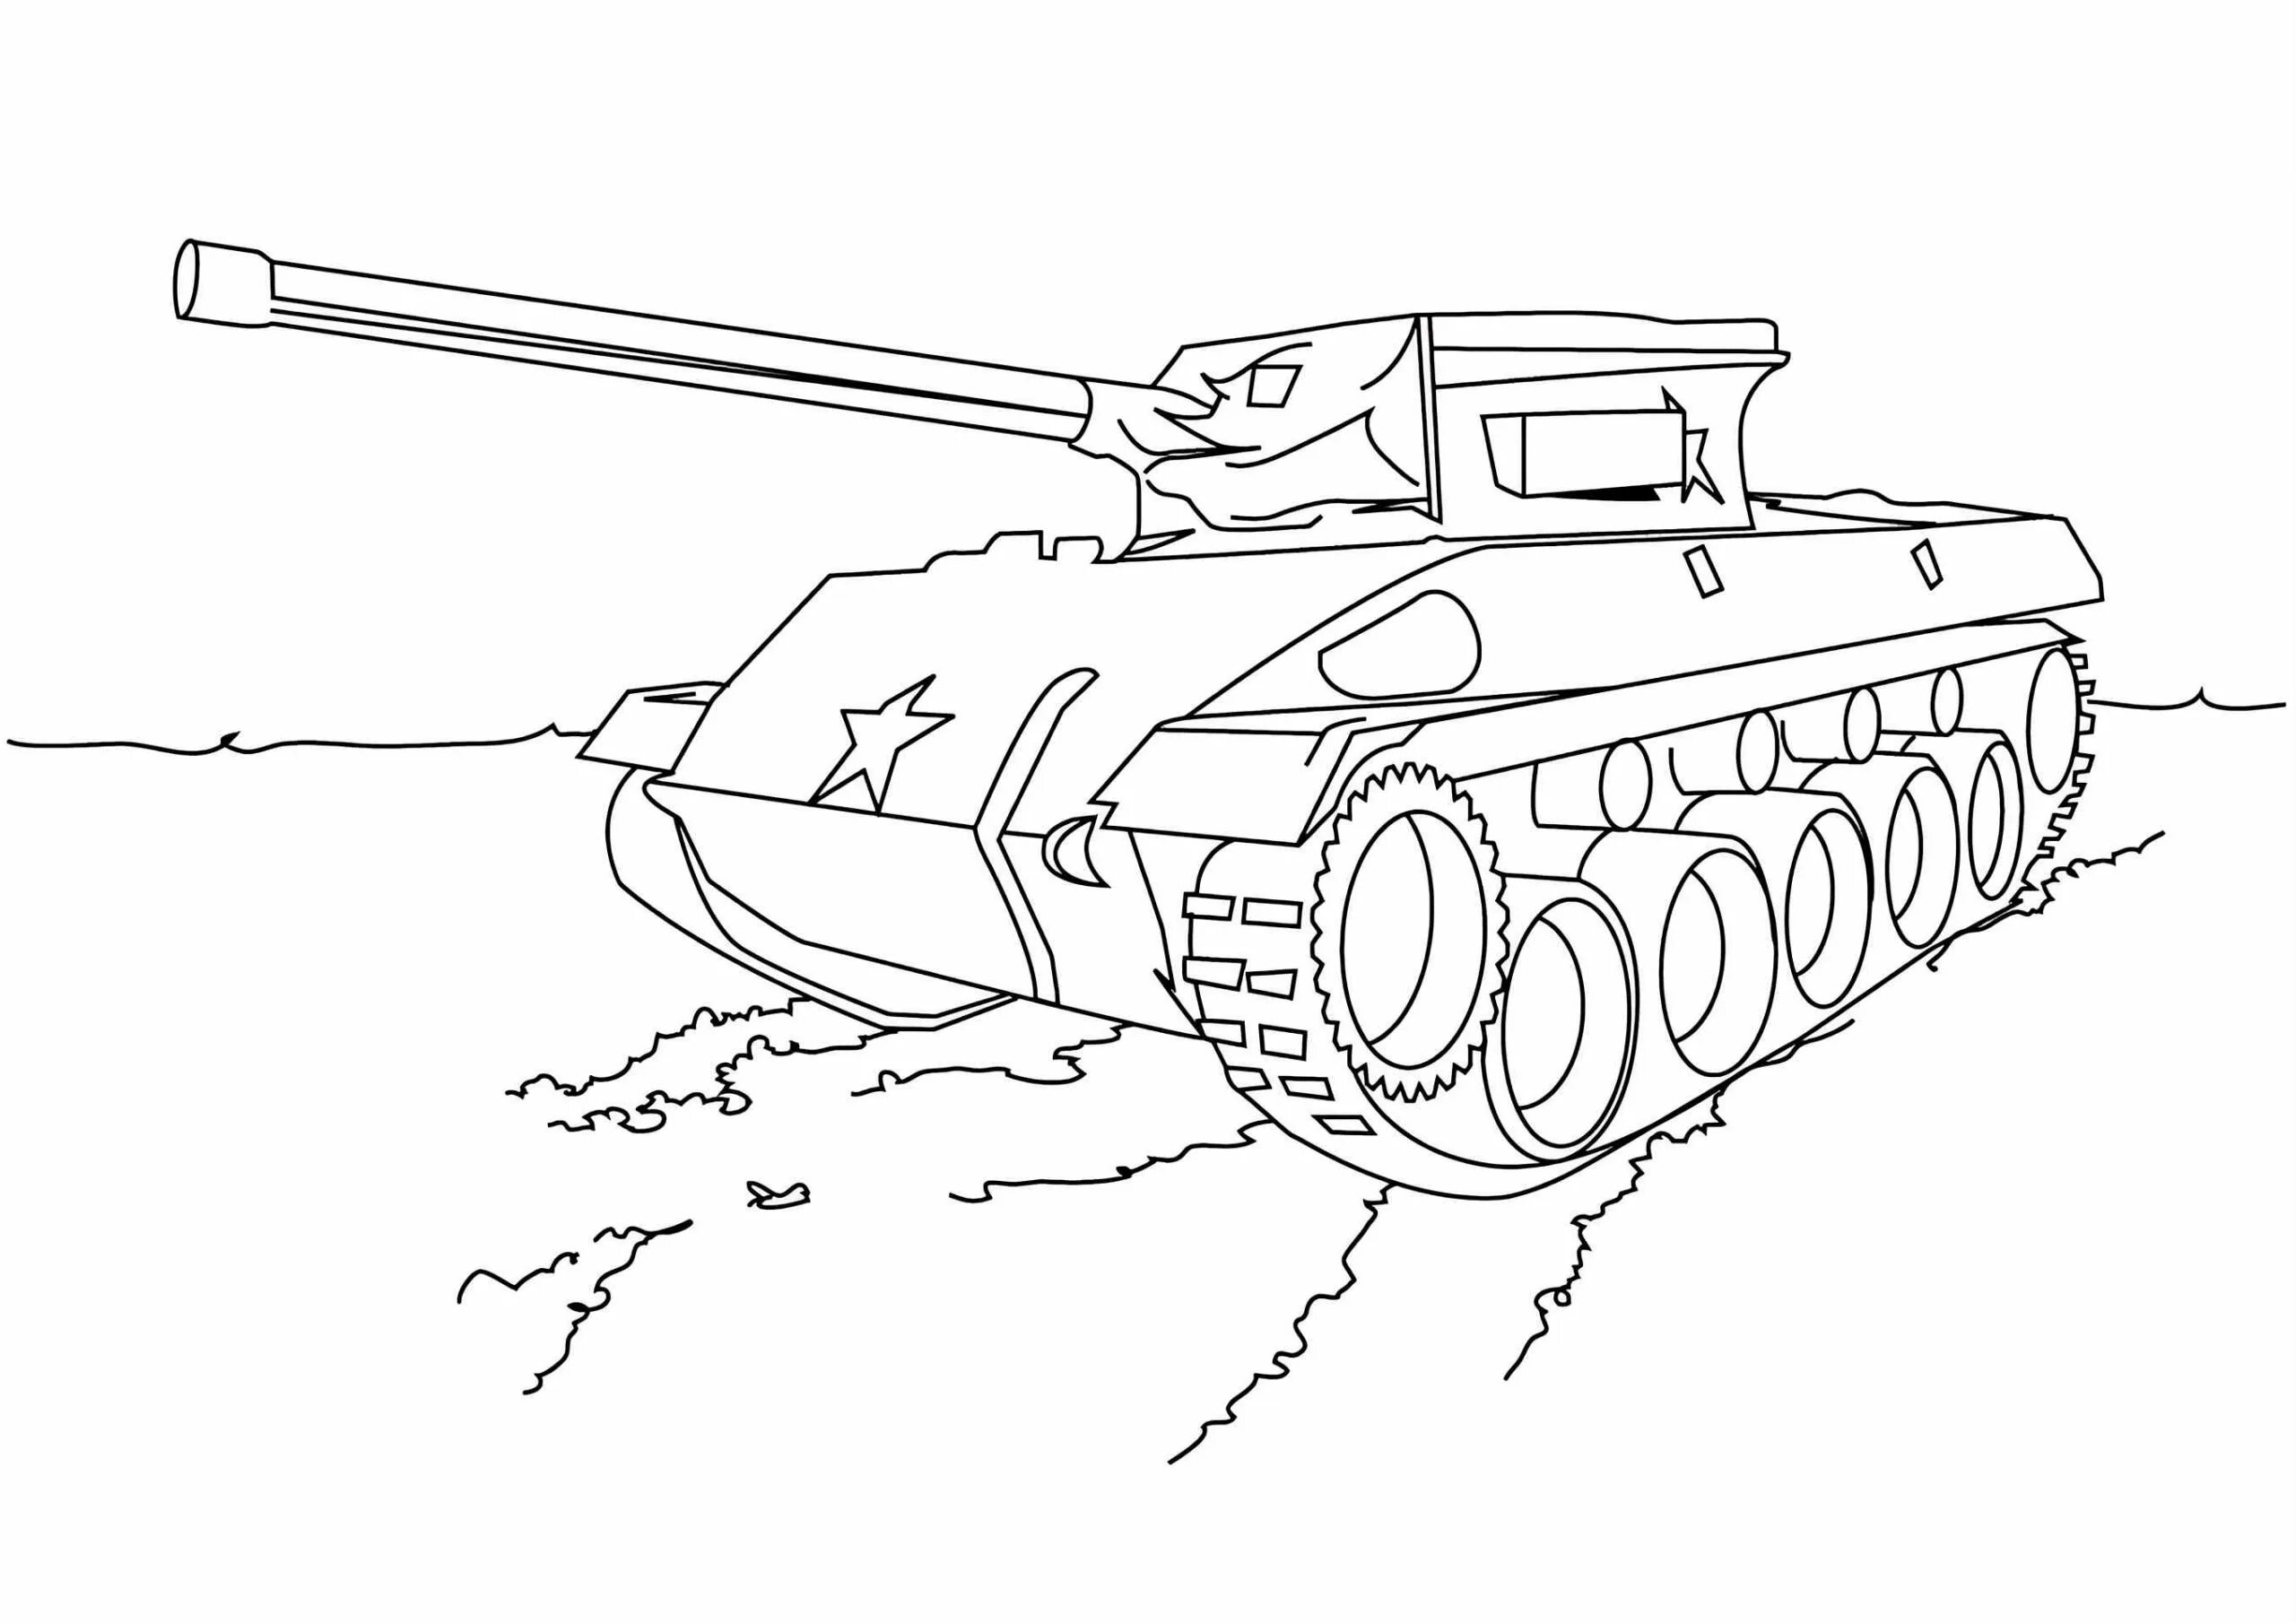 Раскраска танк т34 Военная техника. Раскраска военные танки т34. Раскраска танк т34 Военная техника для детей. Раскраска танк т 34.